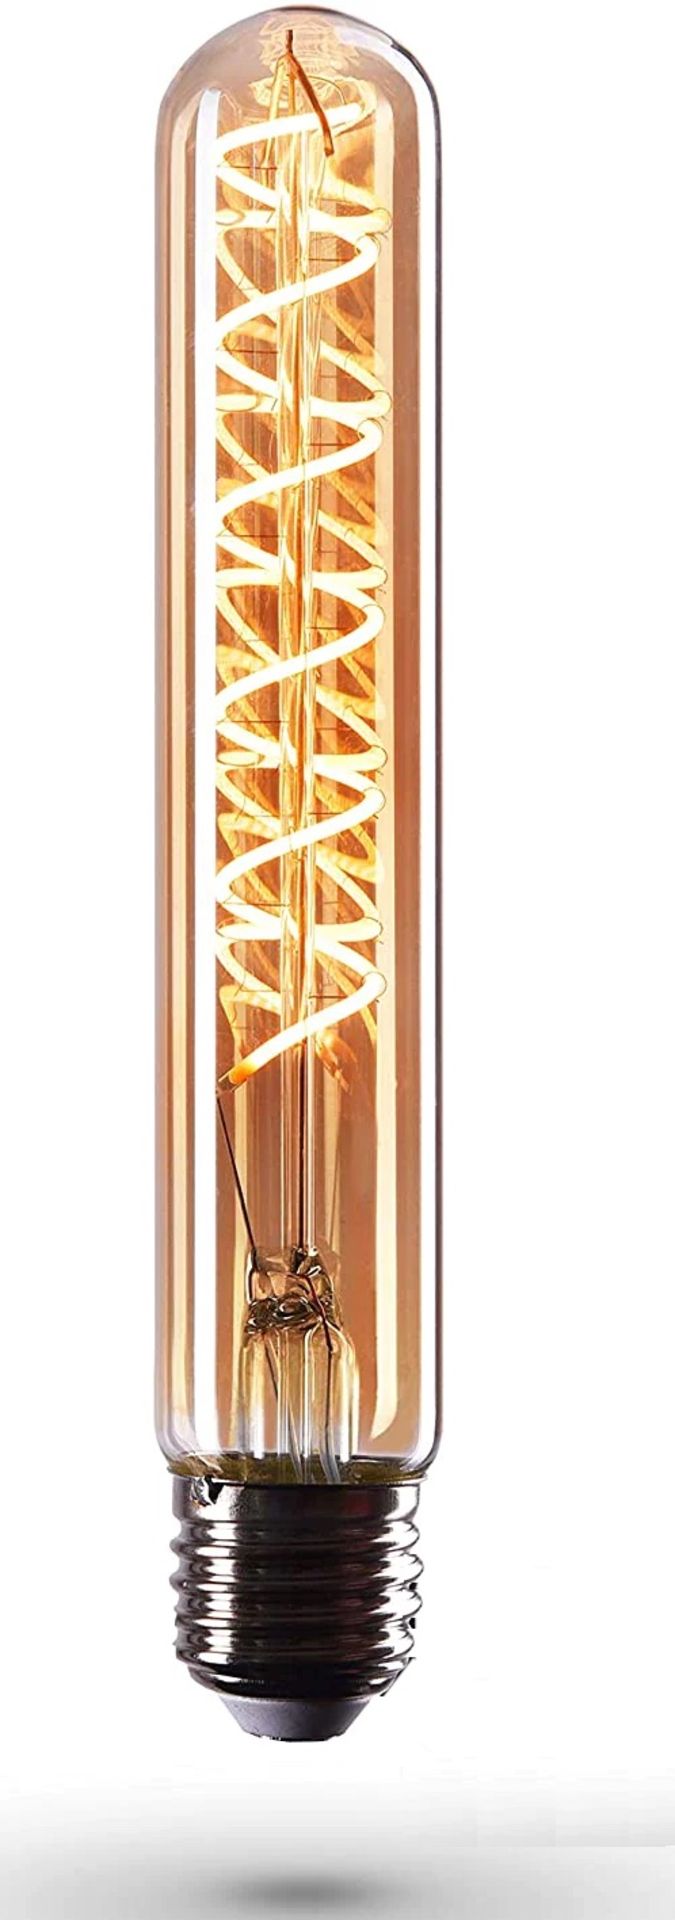 24 x CROWN LED Edison Flat Pipe Lightbulb 4W/40W Warm White - NEW & BOXED - BIG RRP! - Bild 5 aus 7